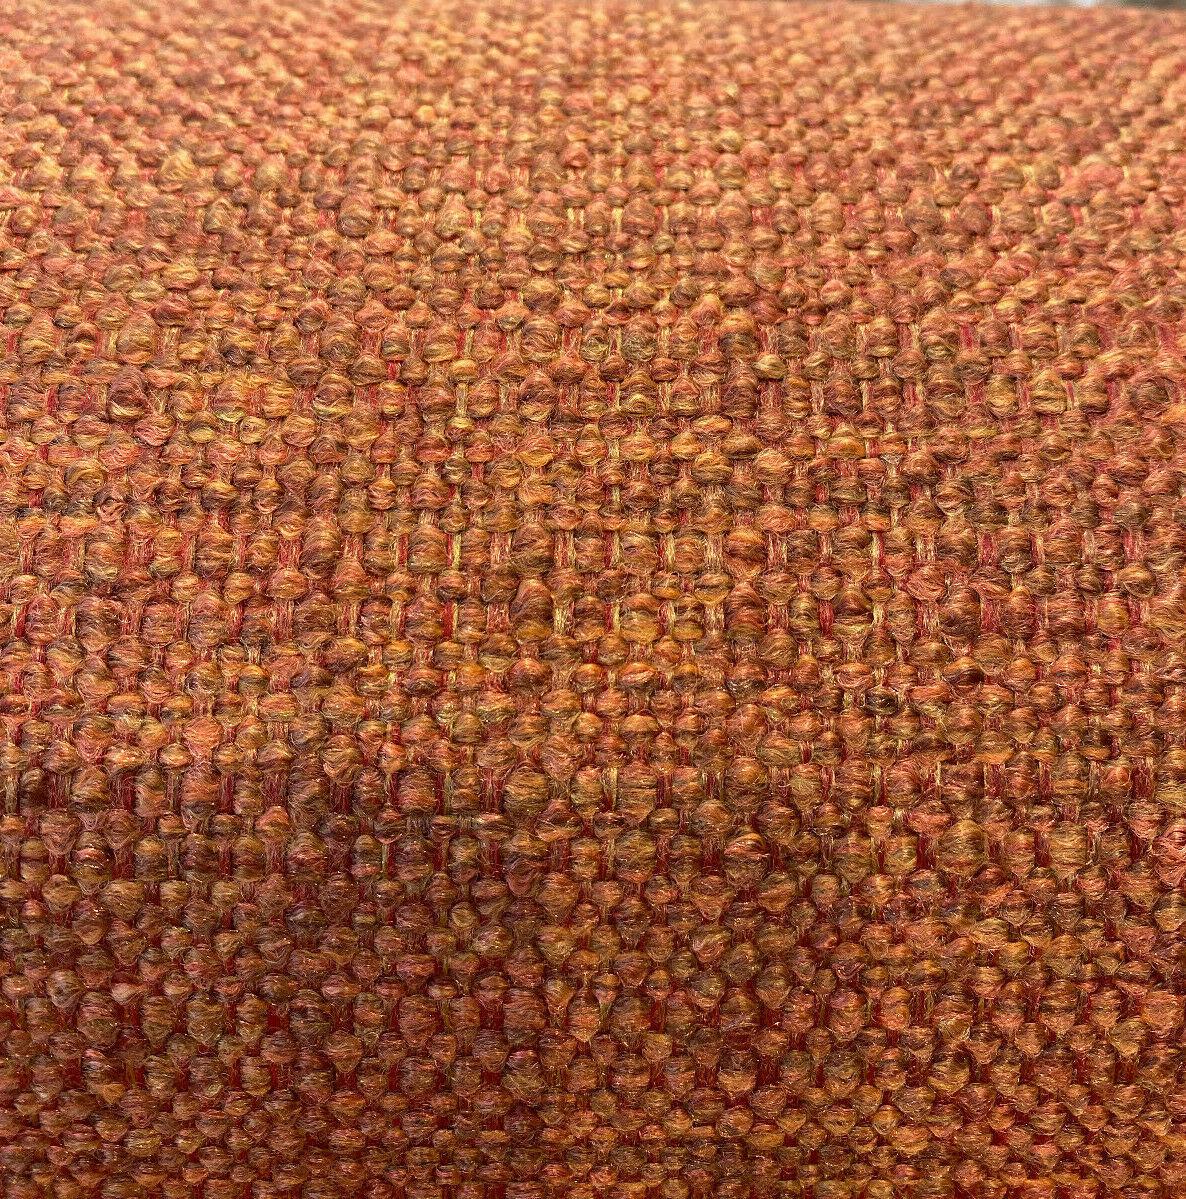 Browse All Orange/Rust Tweeds fabrics